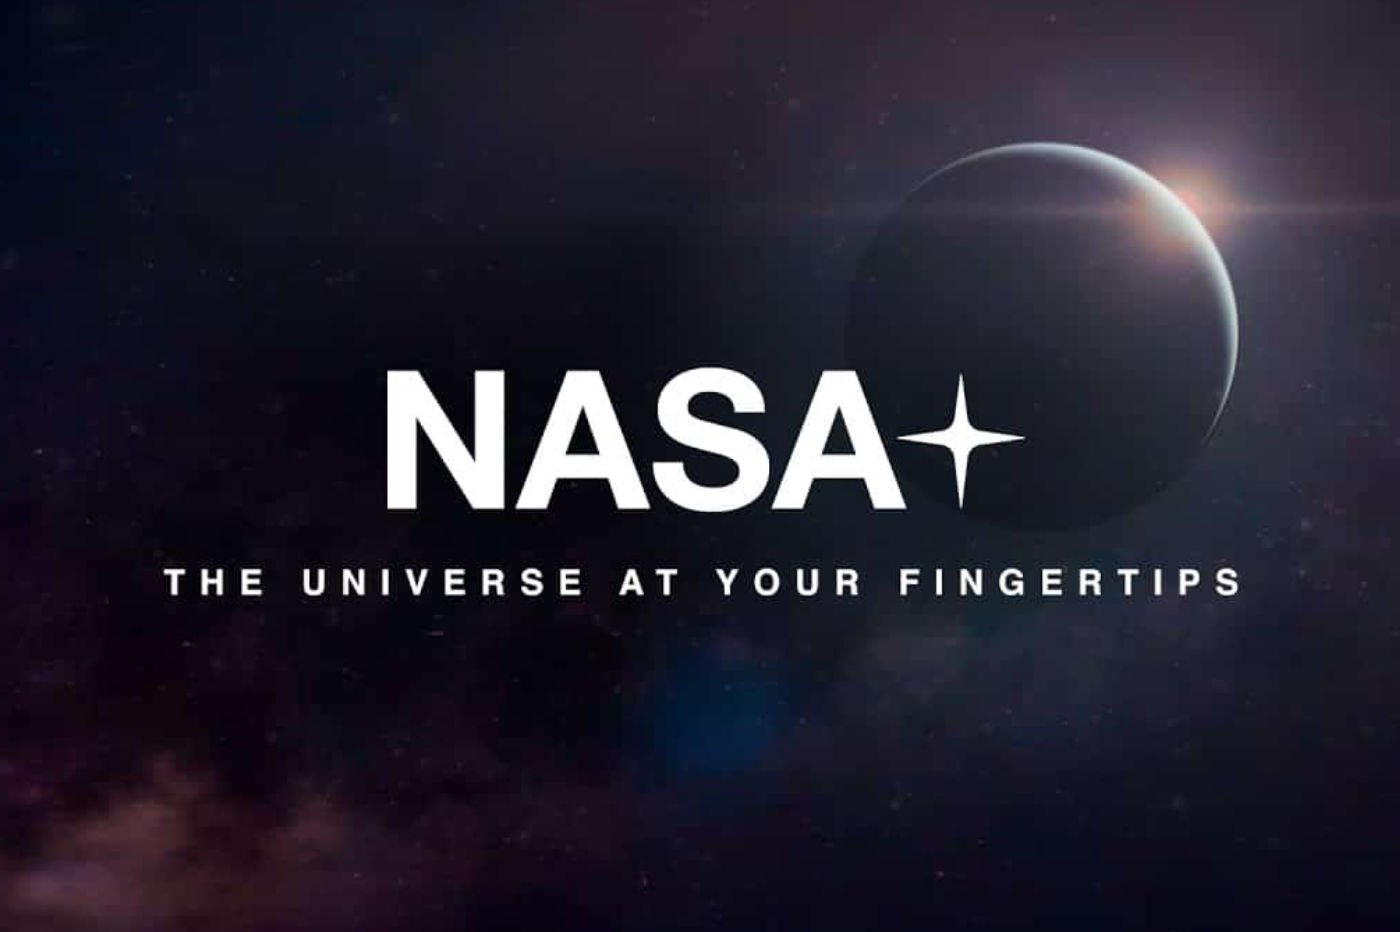 La NASA inaugure son service de streaming intégralement gratuit